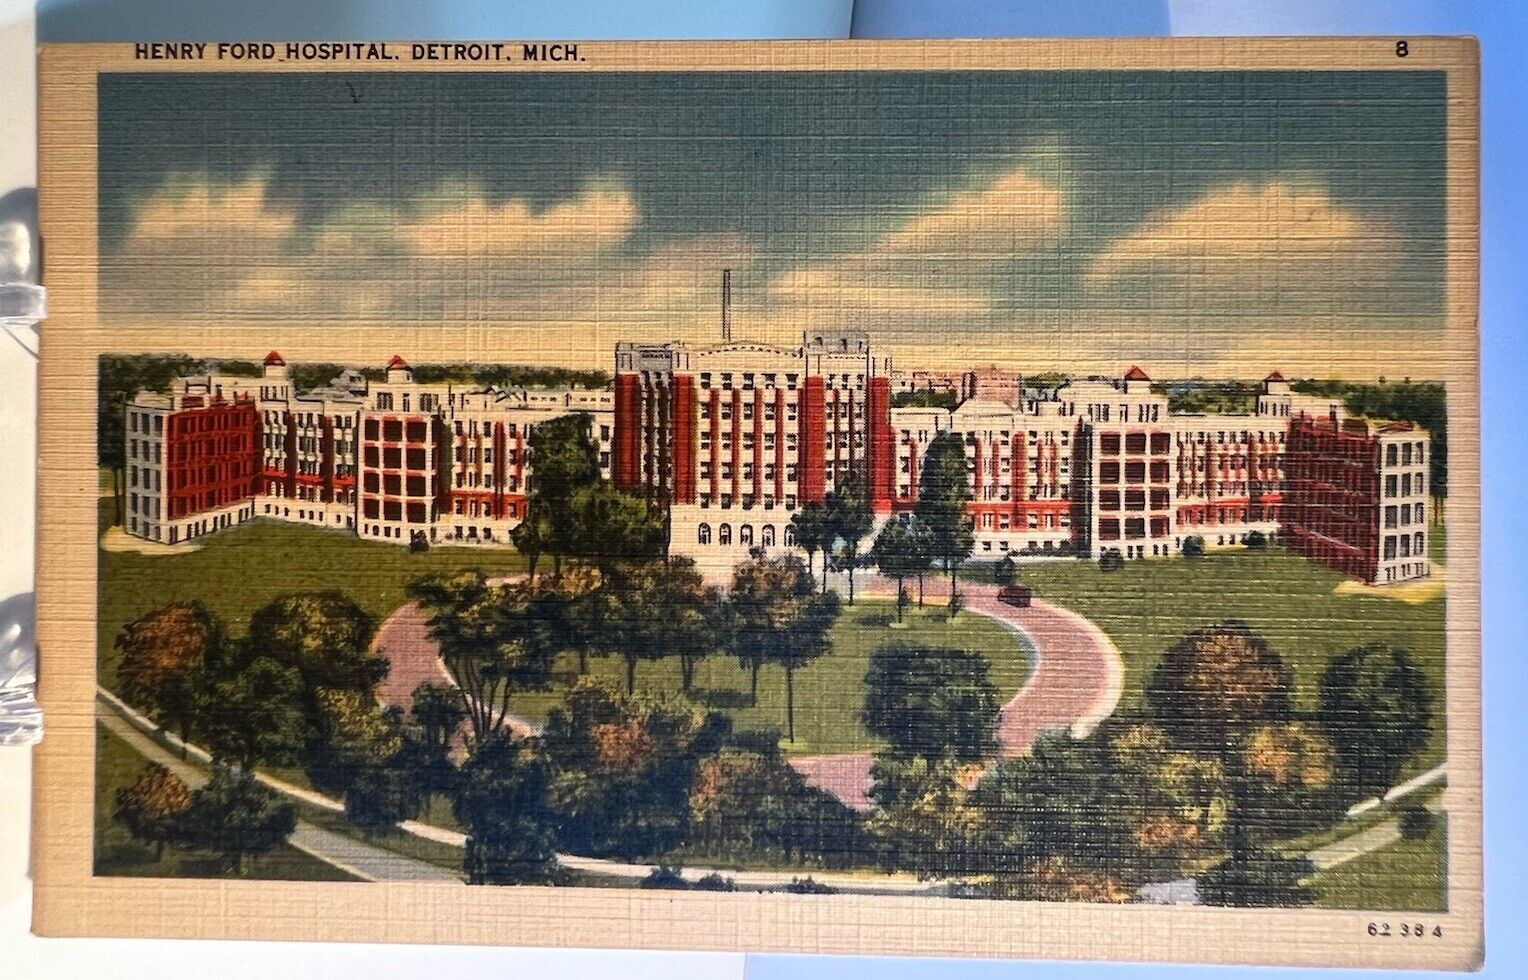 Henry Ford Hospital, Detroit, Michigan - Tichnor Quality Views - Rare Postcard